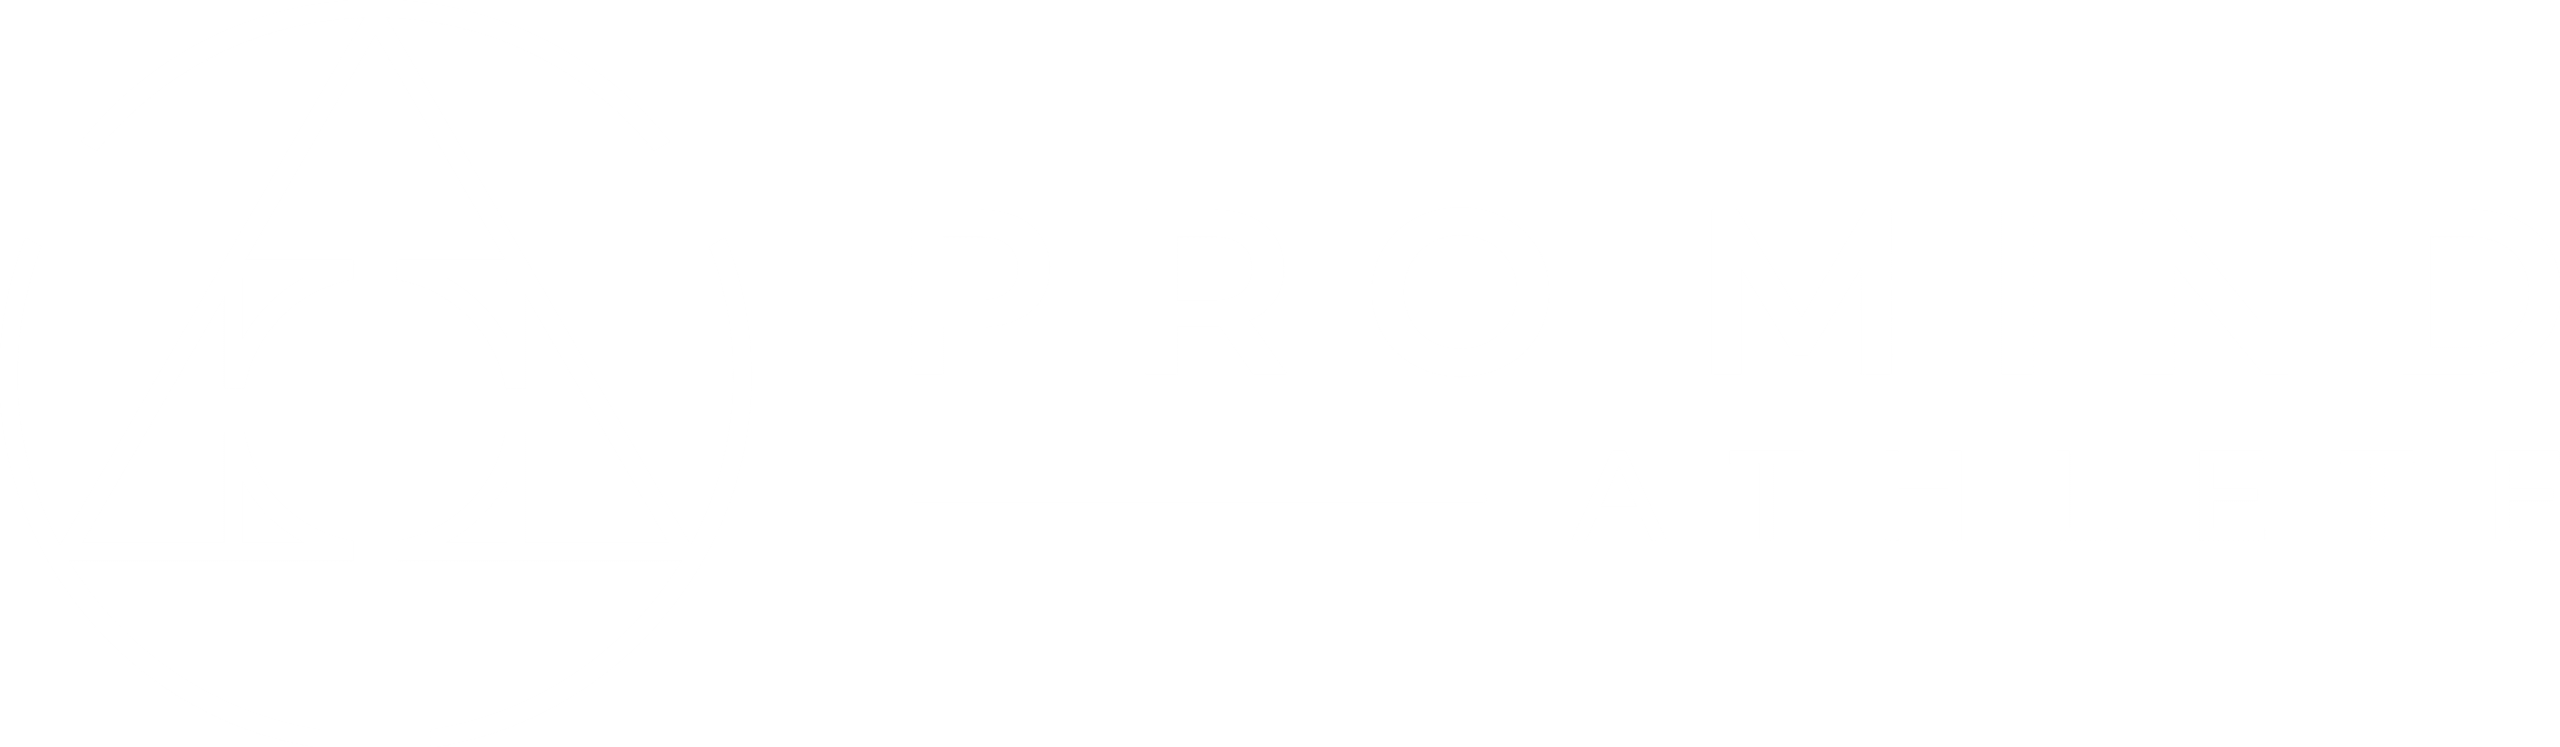 pro mind athlete logo design v2 white